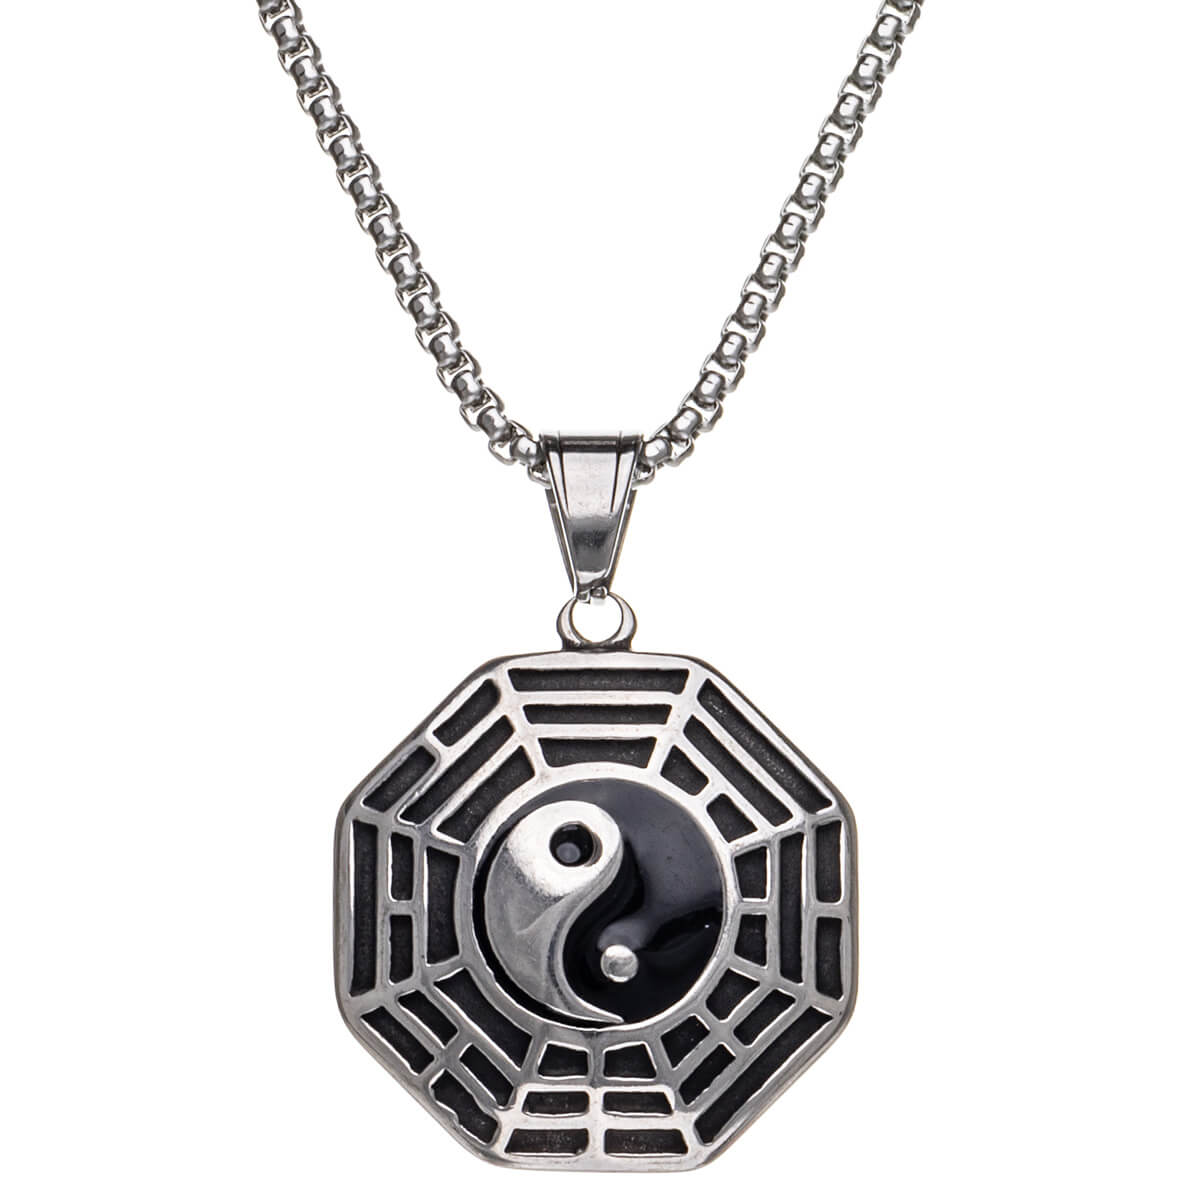 Yin yang pendant necklace 60cm (Steel 316L)